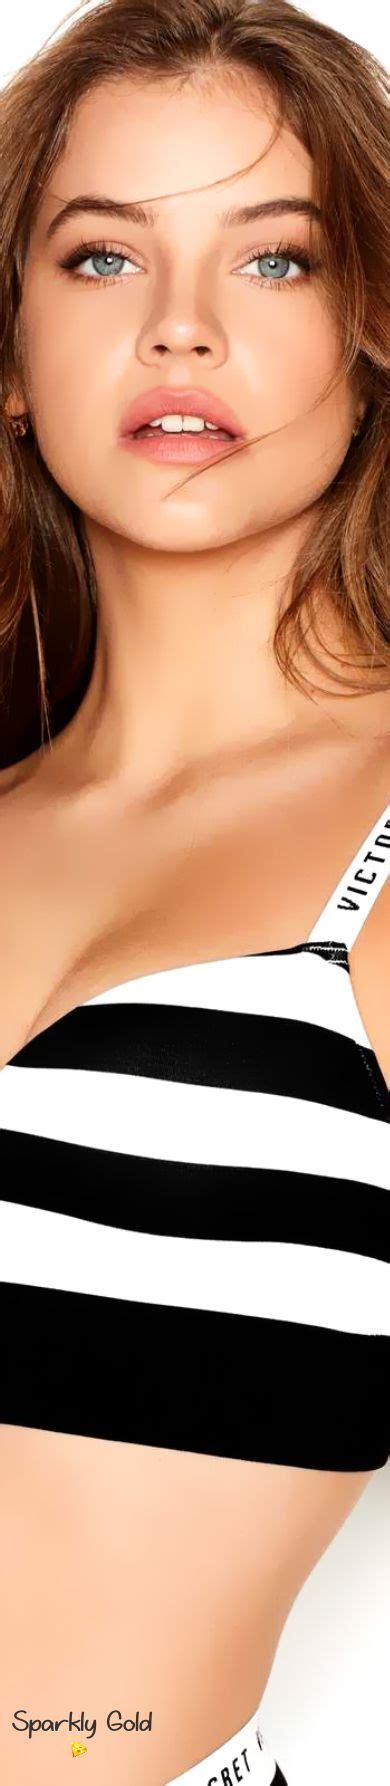 Barbara Palvin Is New Angel For Victoria Secret Mar 19 Barbarapalvin Victoriassecret